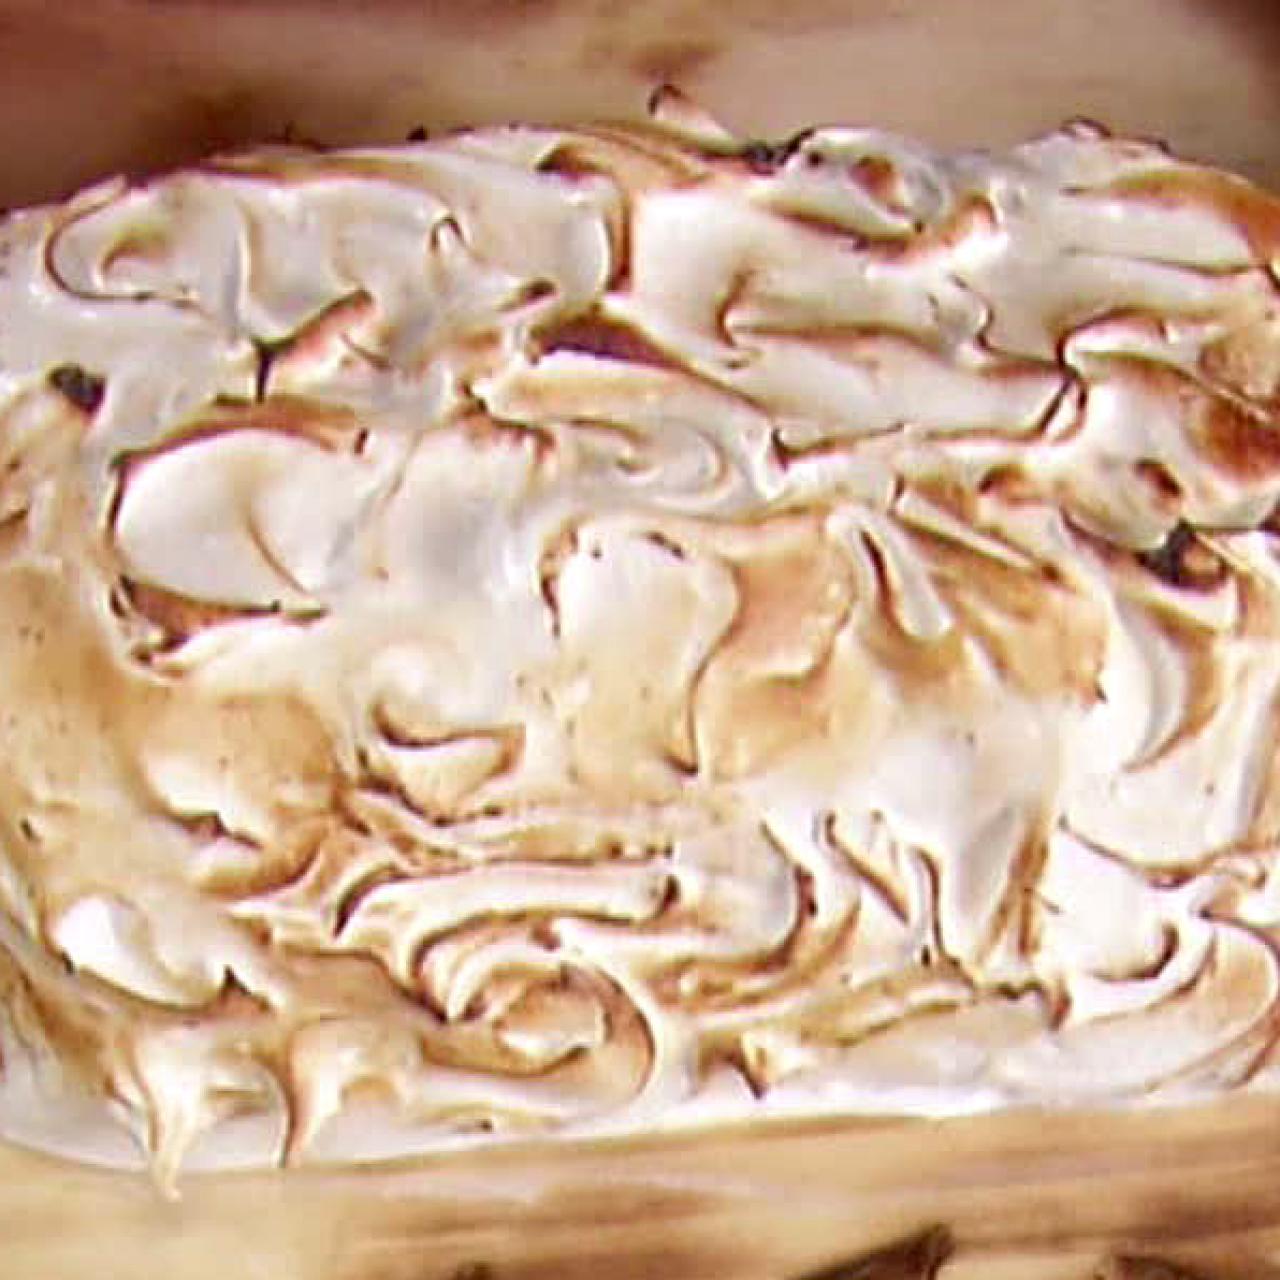 Baked Alaska recipe - BBC Food